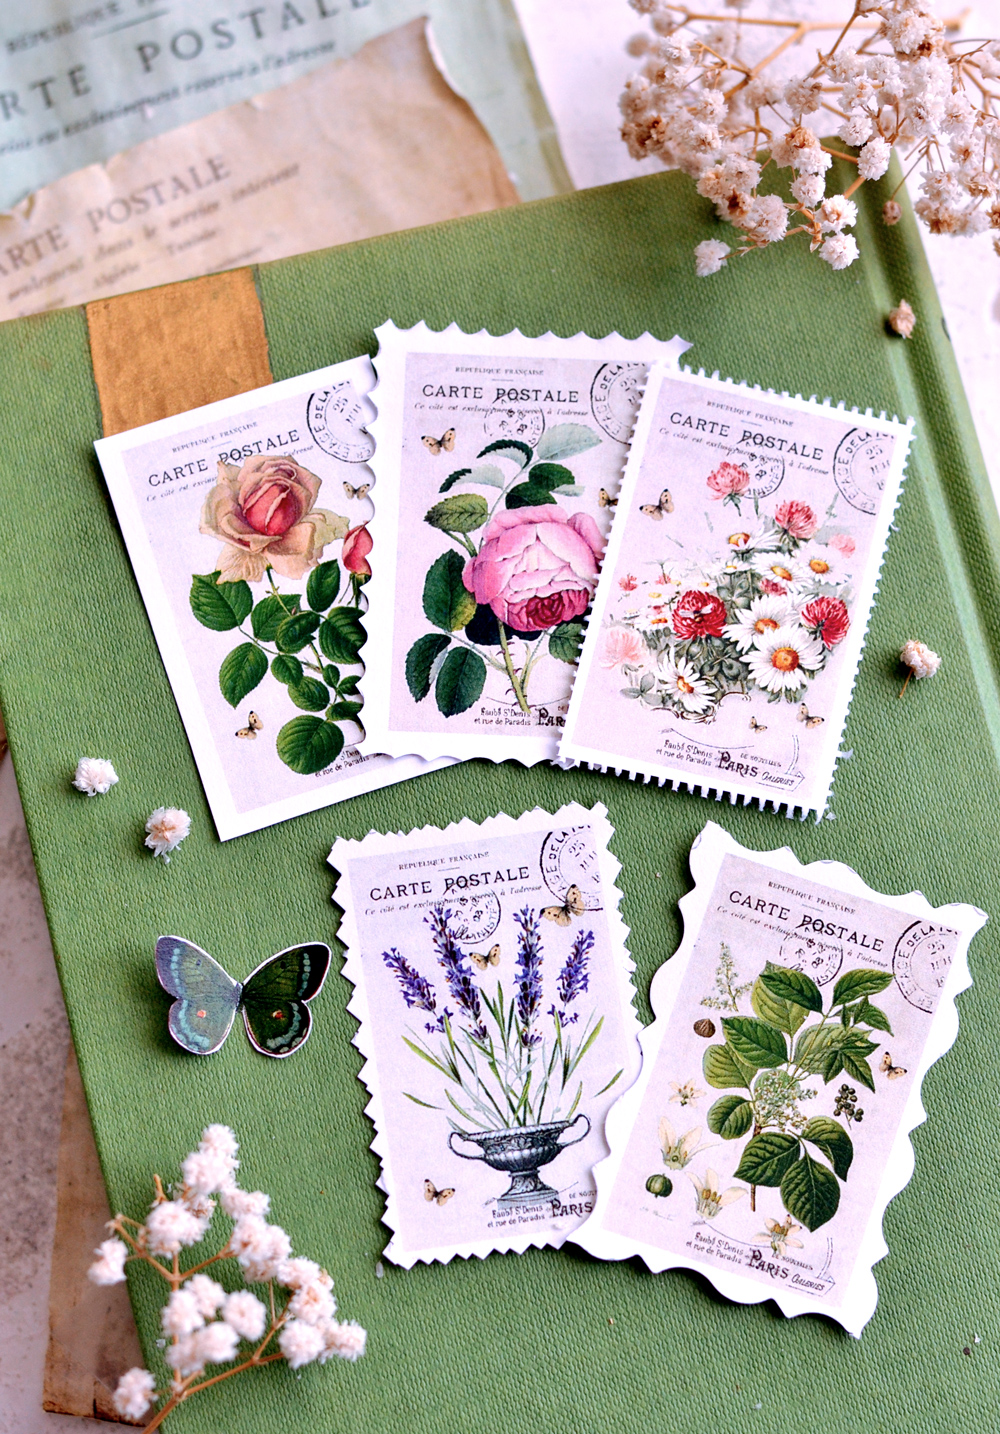 DIY Vintage Postage Stamps - bydreamsfactory.com #DIY #vintage #shabbychic #crafts #DIYpaper 